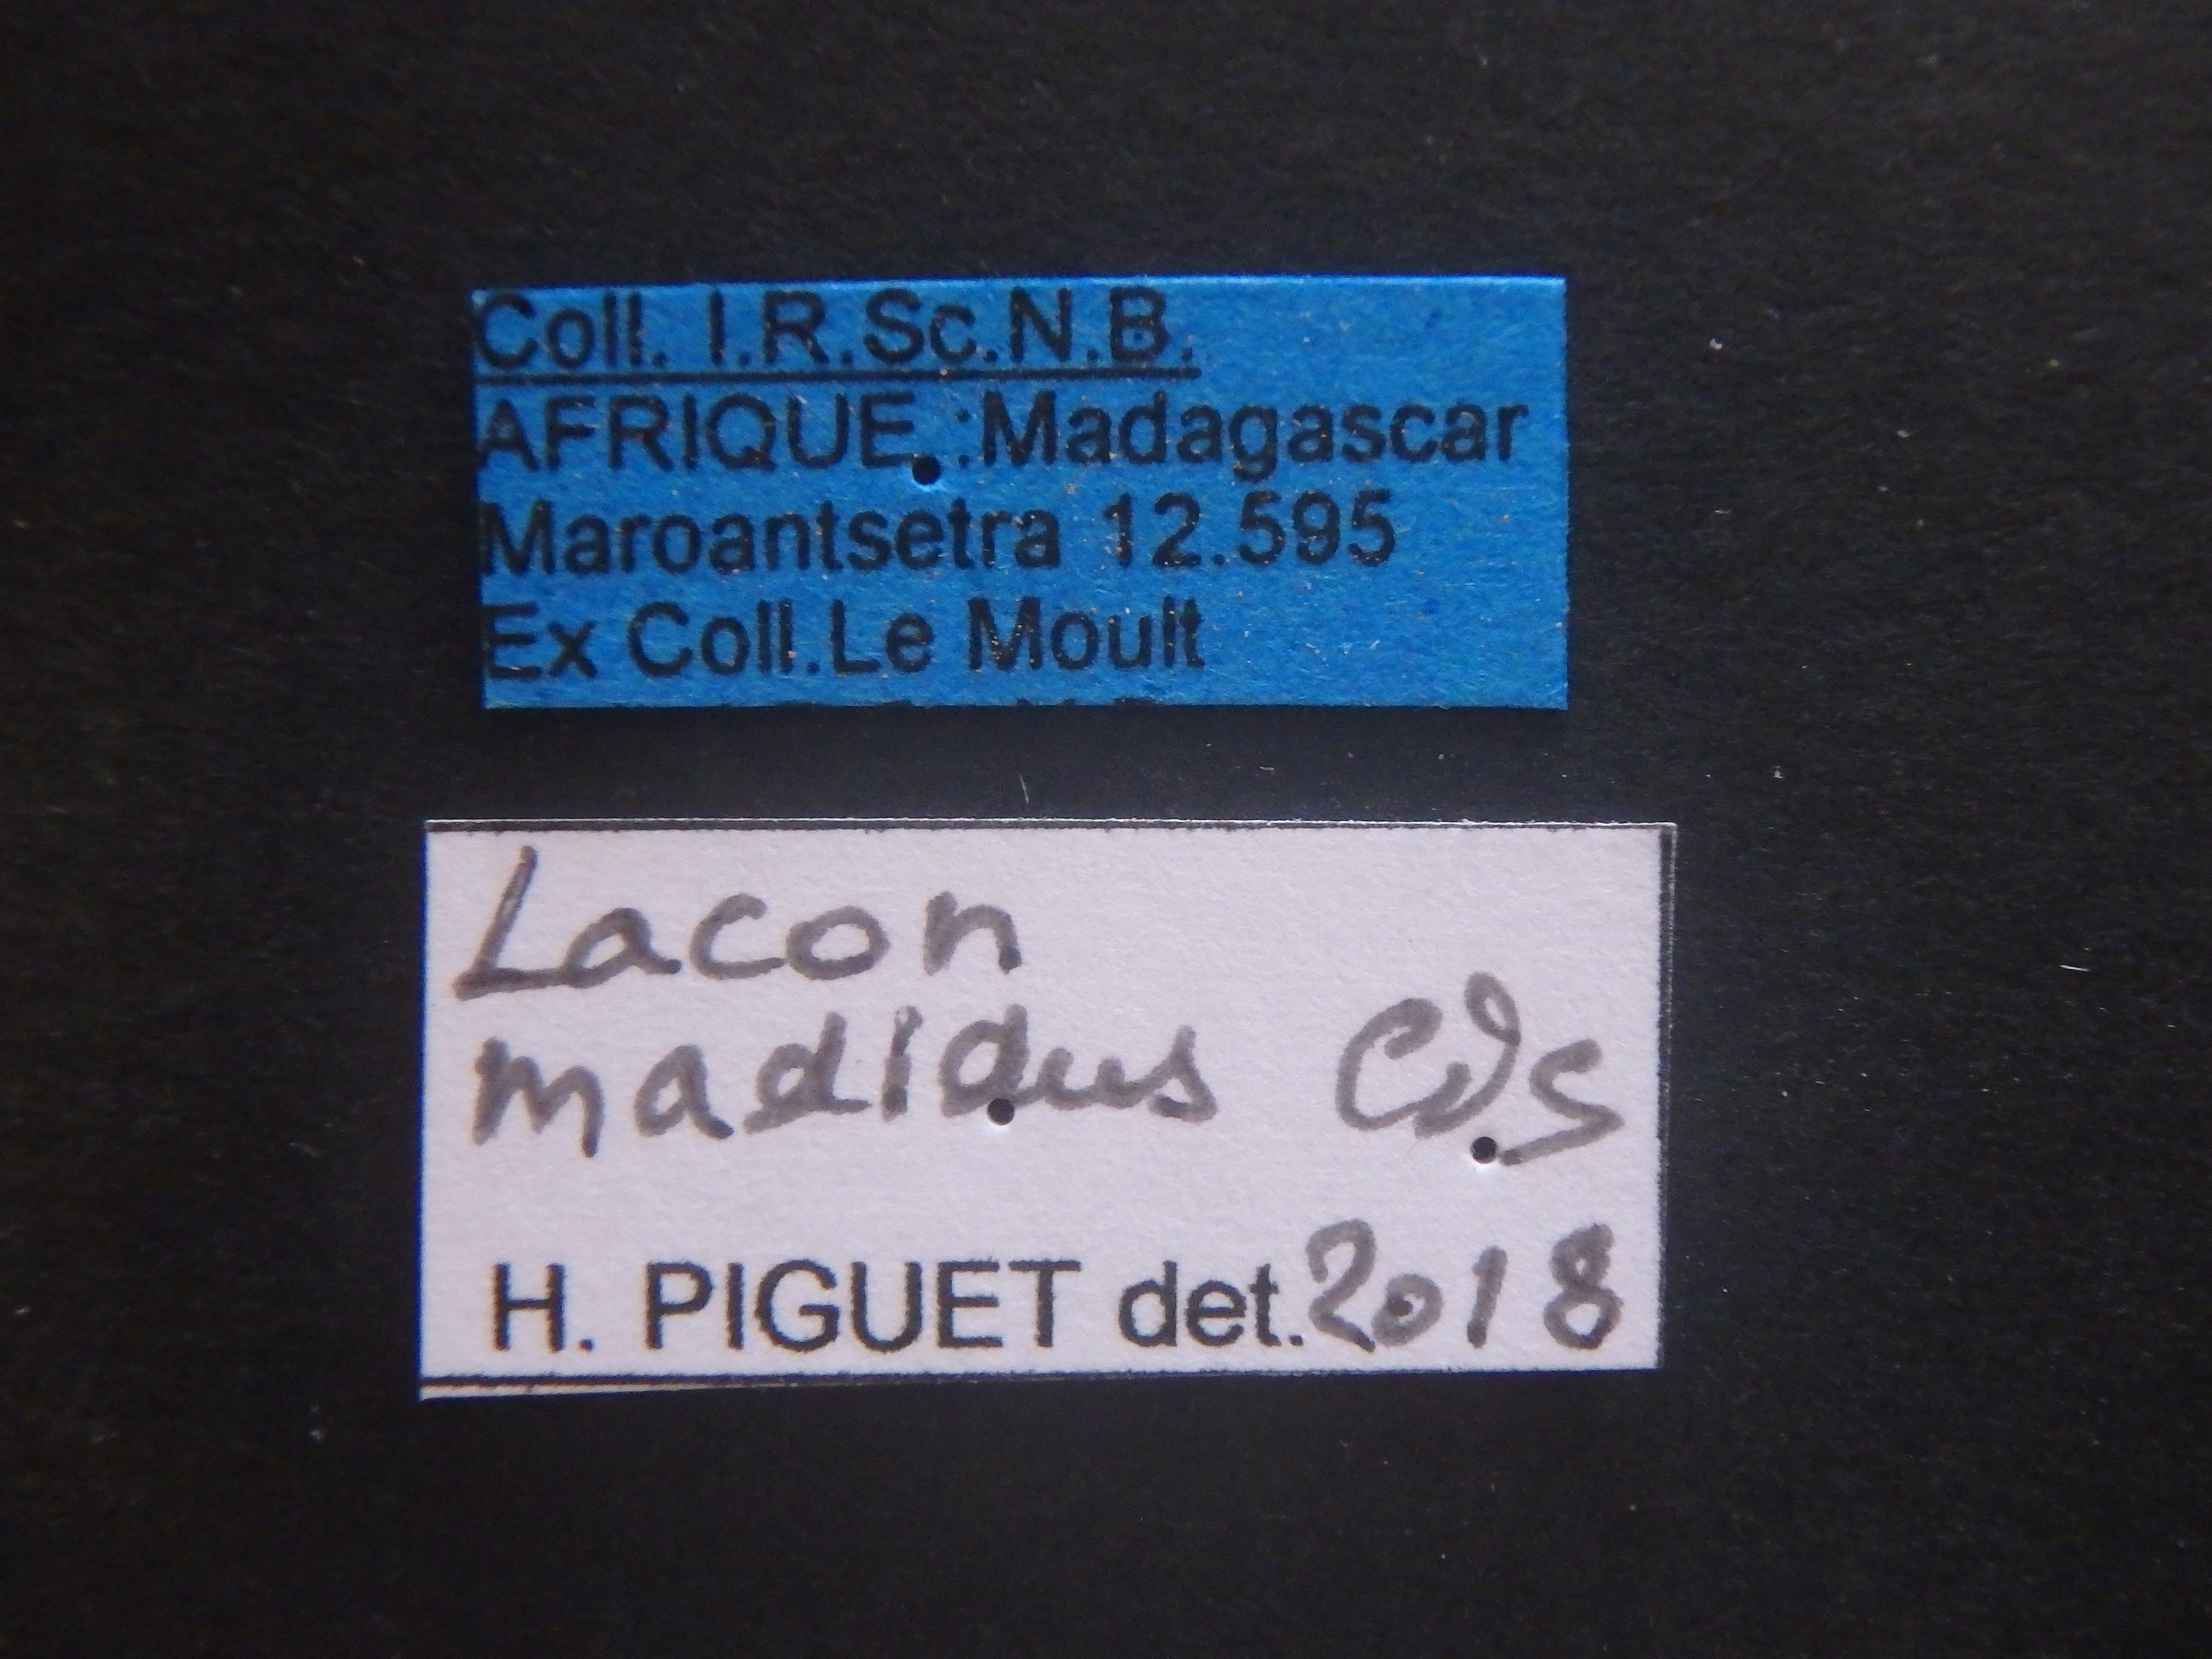 Lacon madidus Labels.JPG